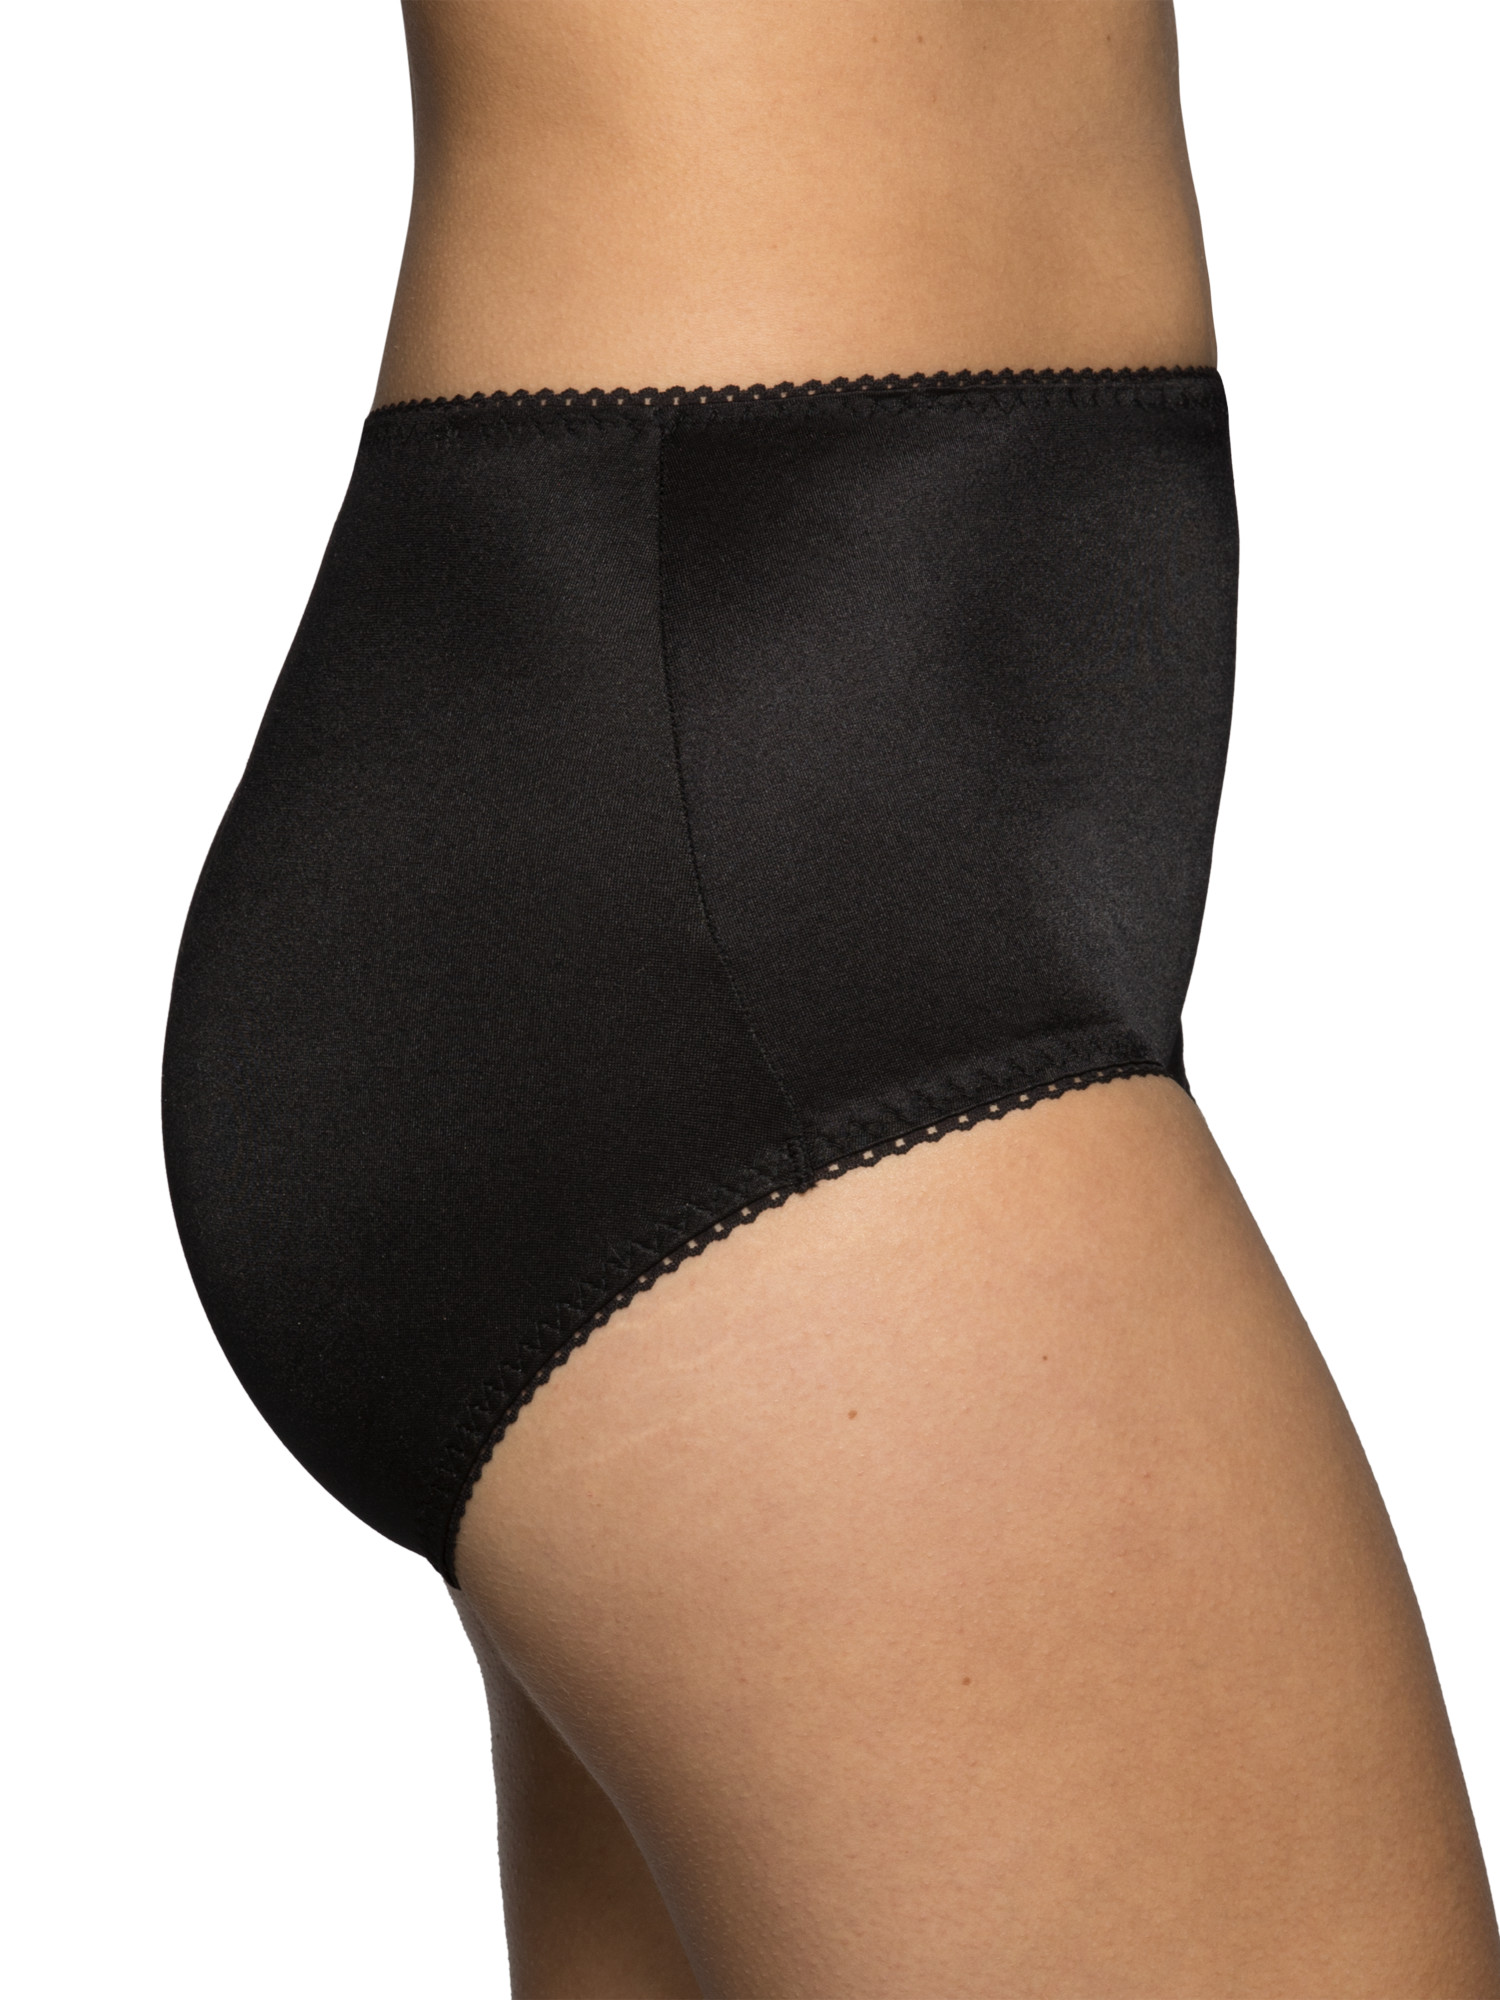 Vanity Fair Radiant Collection Women's Undershapers Brief Underwear, 3 Pack - image 5 of 12